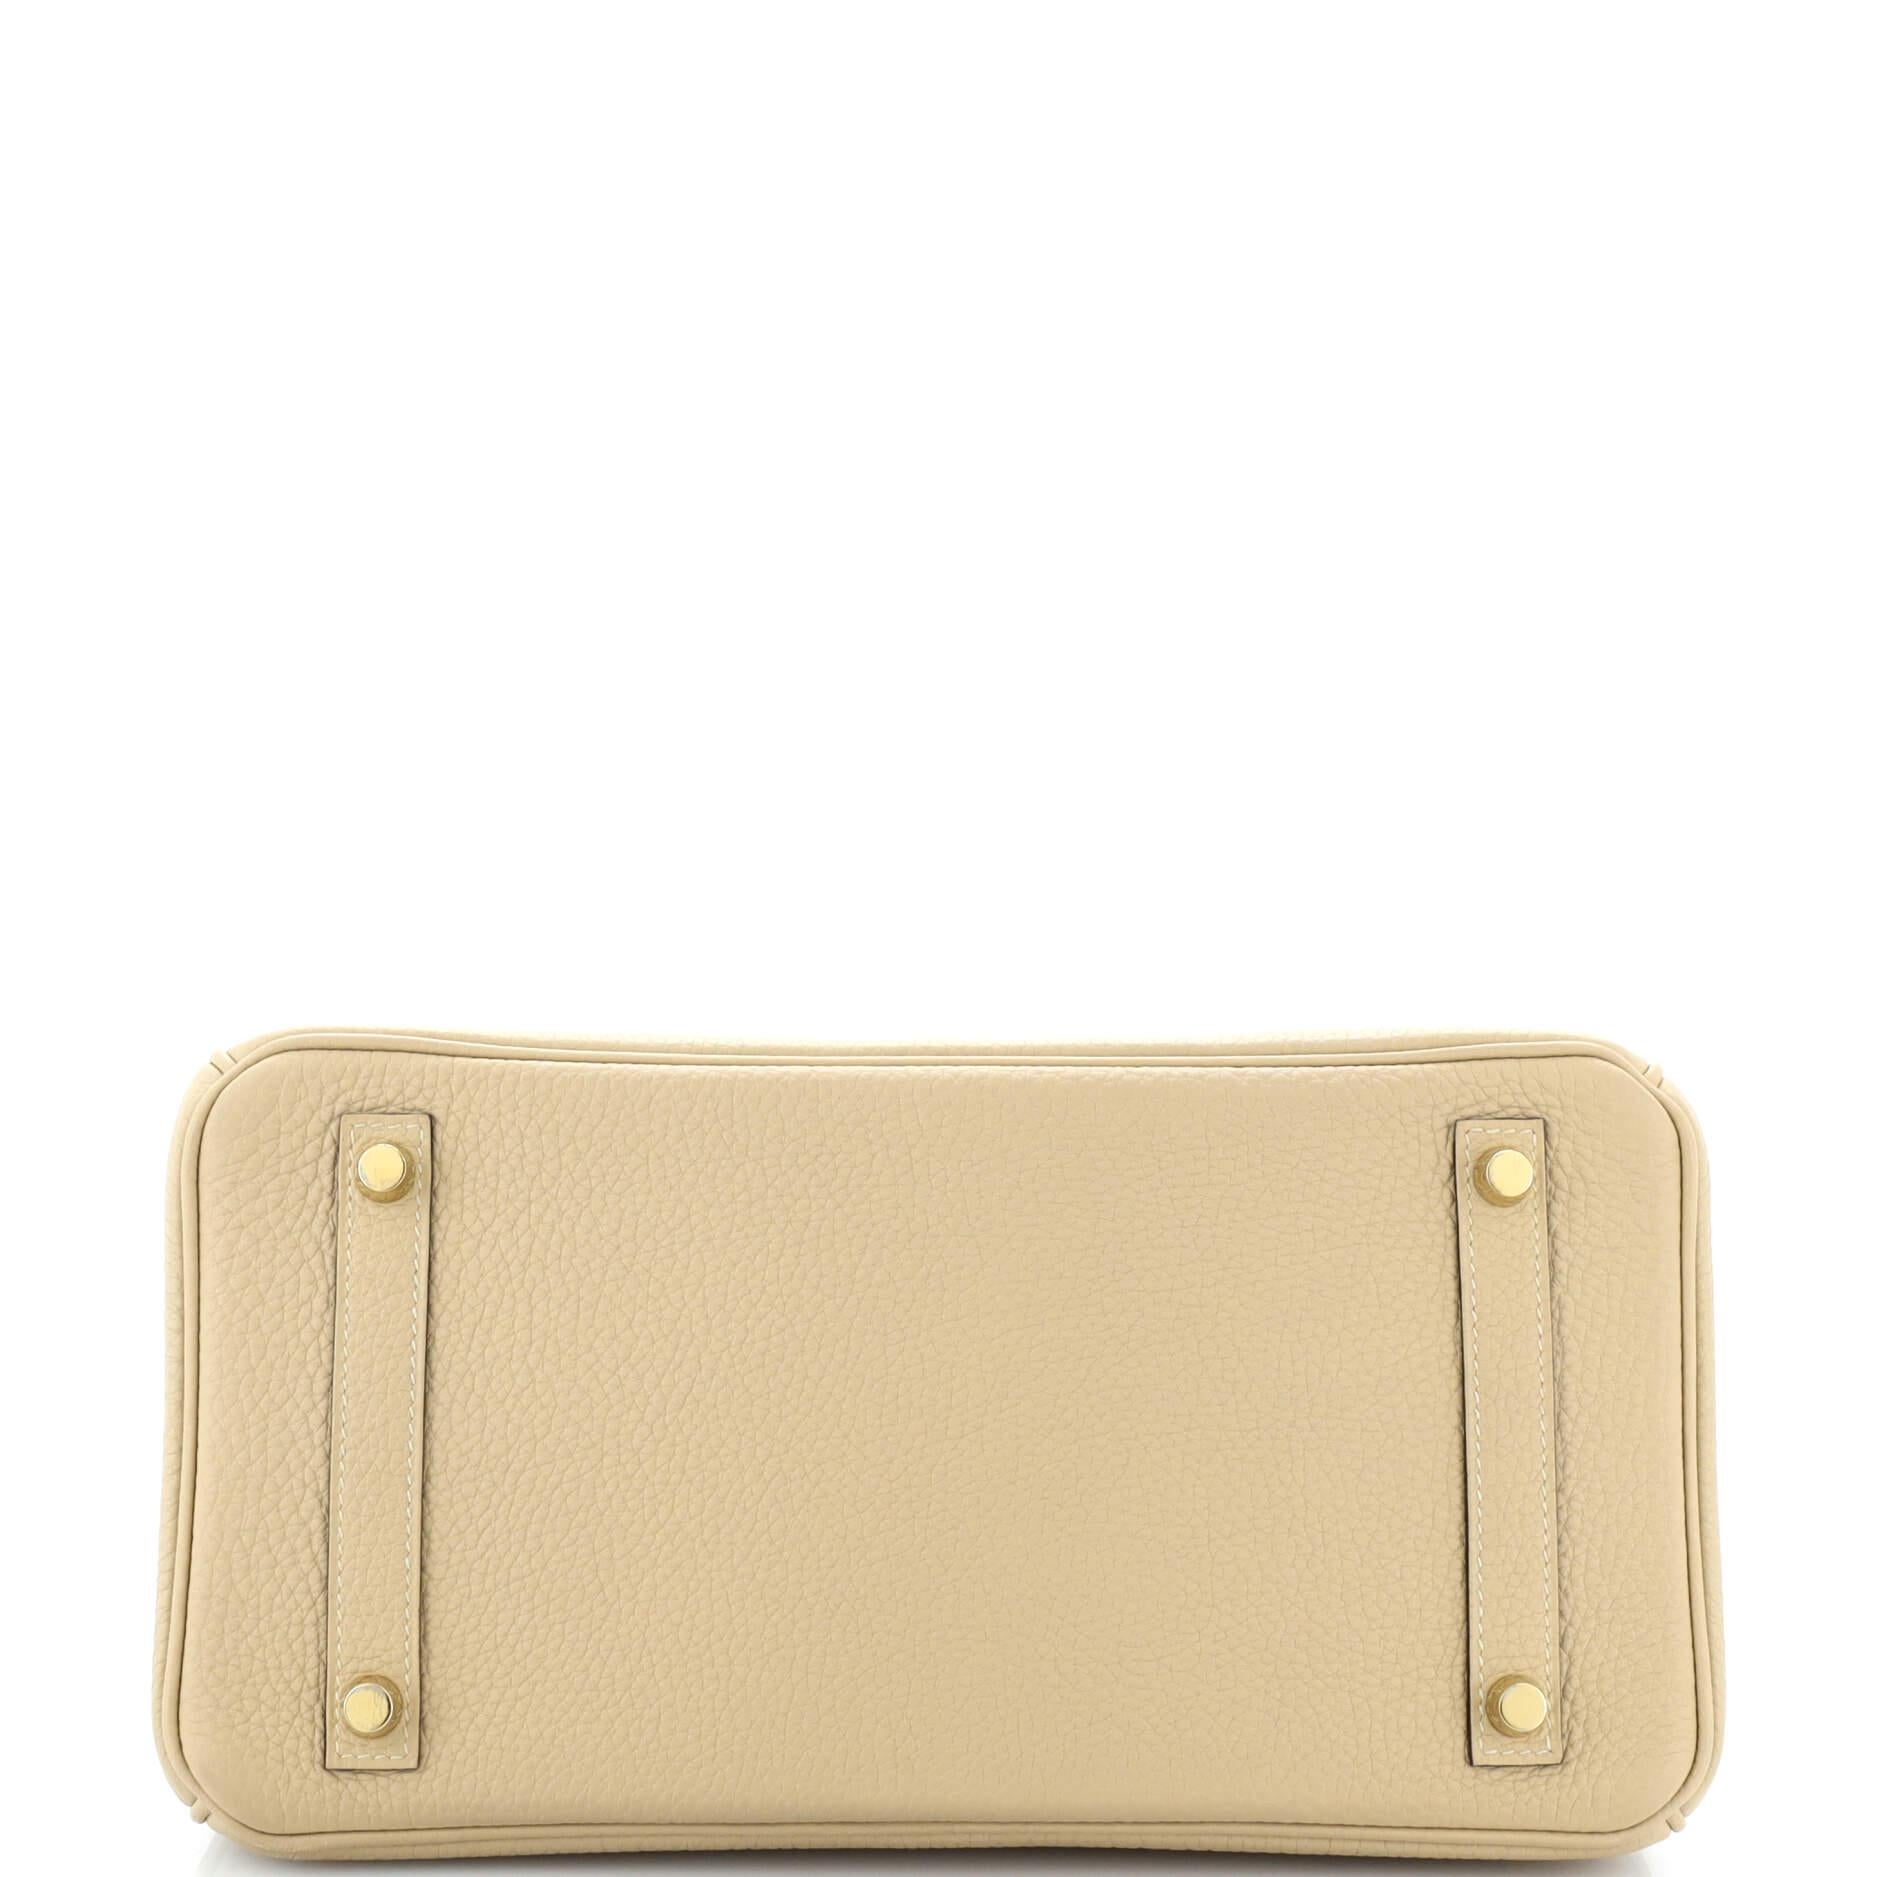 Hermes Birkin Handbag Light Togo with Gold Hardware 30 1